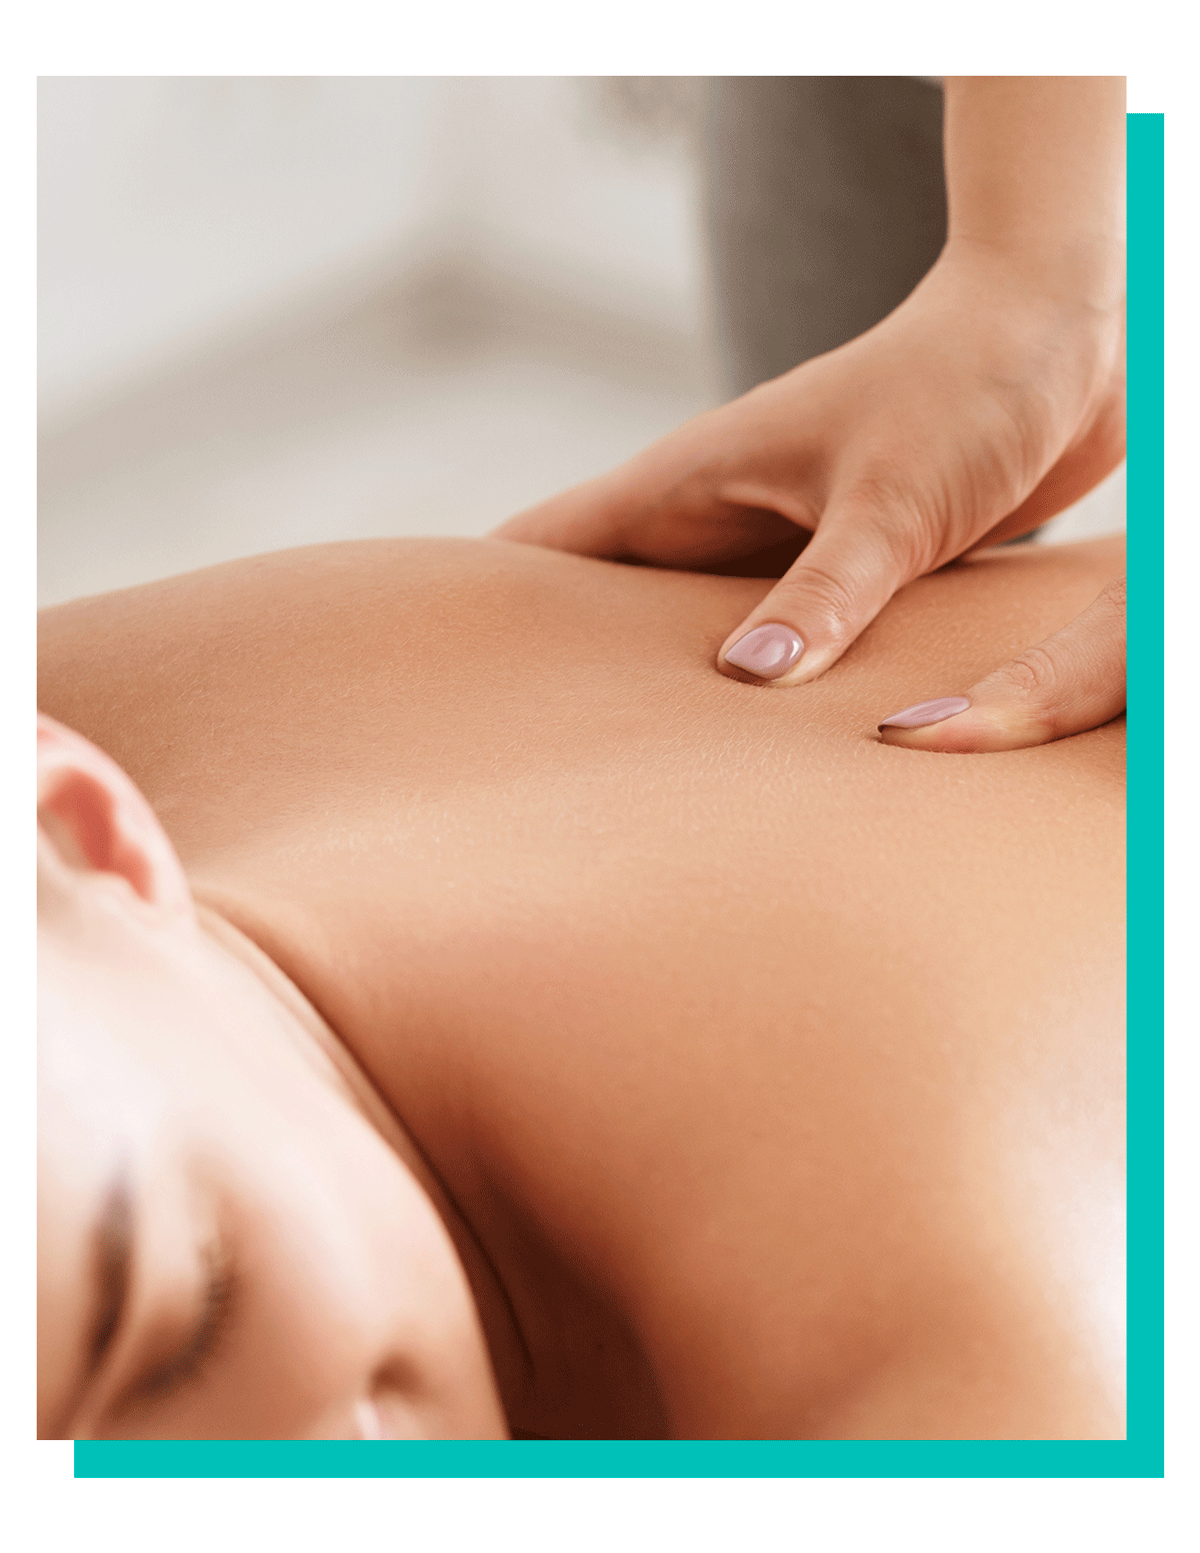 sarasota massage therapy